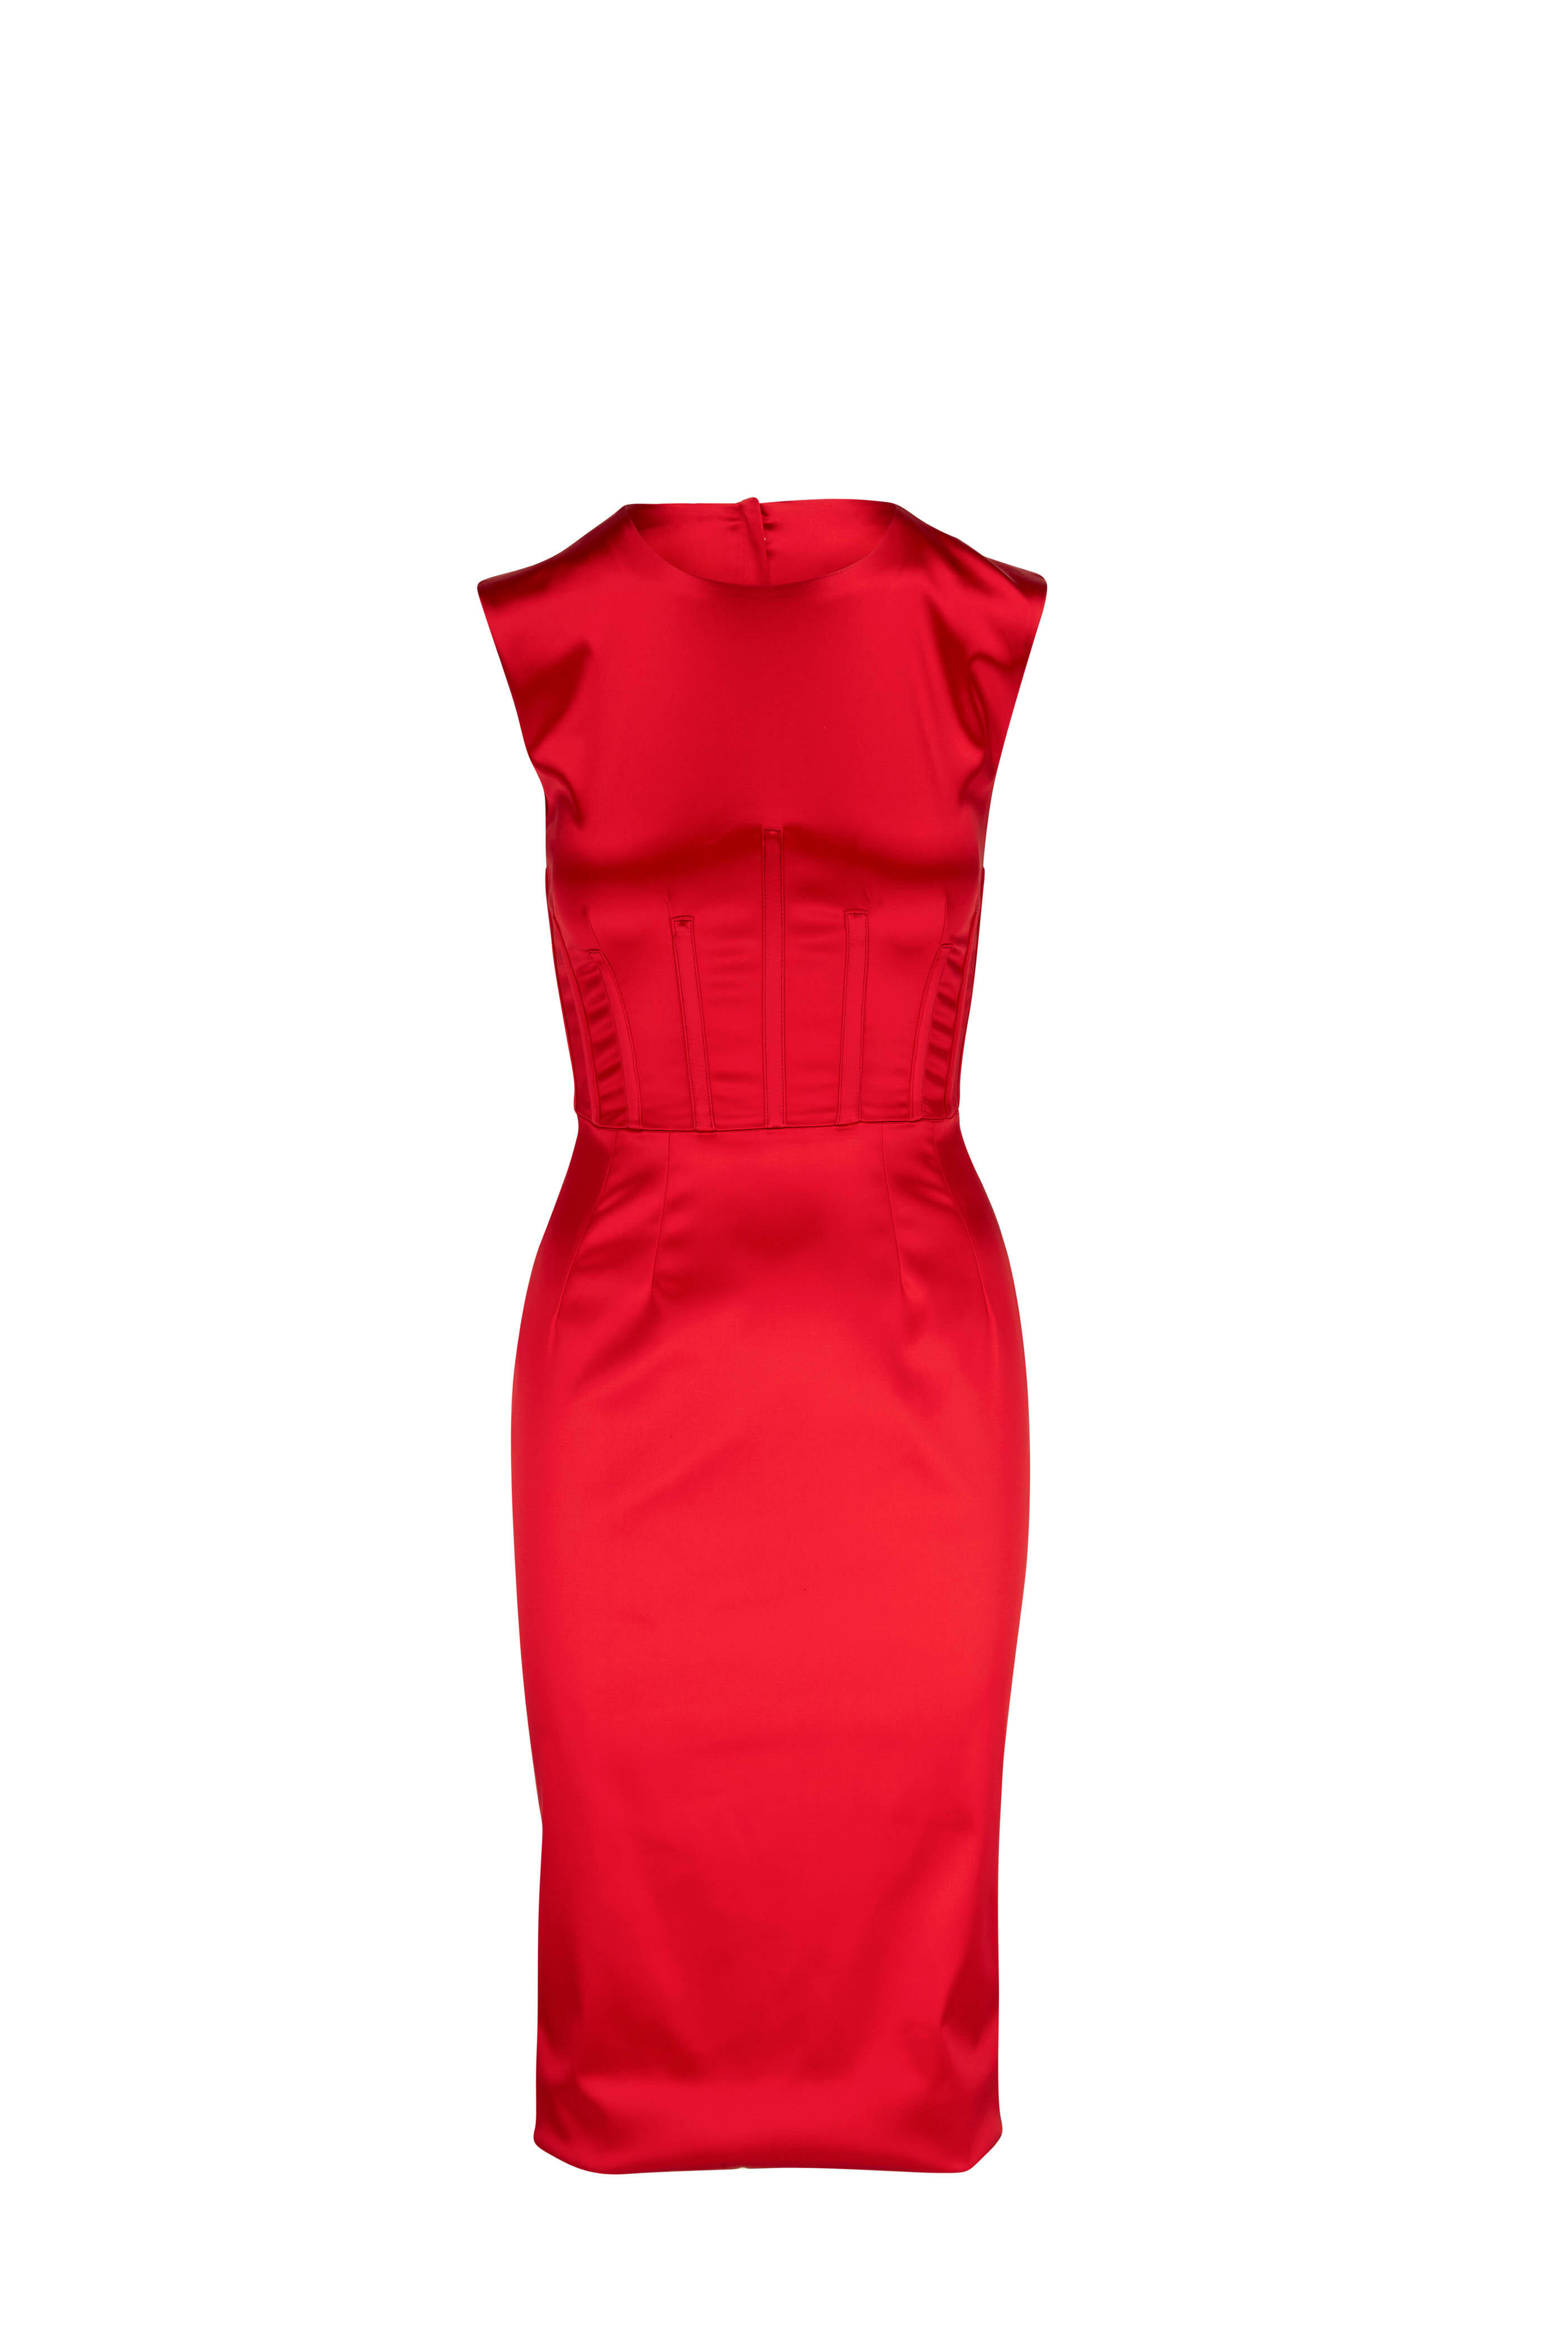 Dolce & Gabbana - Red Bodycon Corset Dress | Mitchell Stores